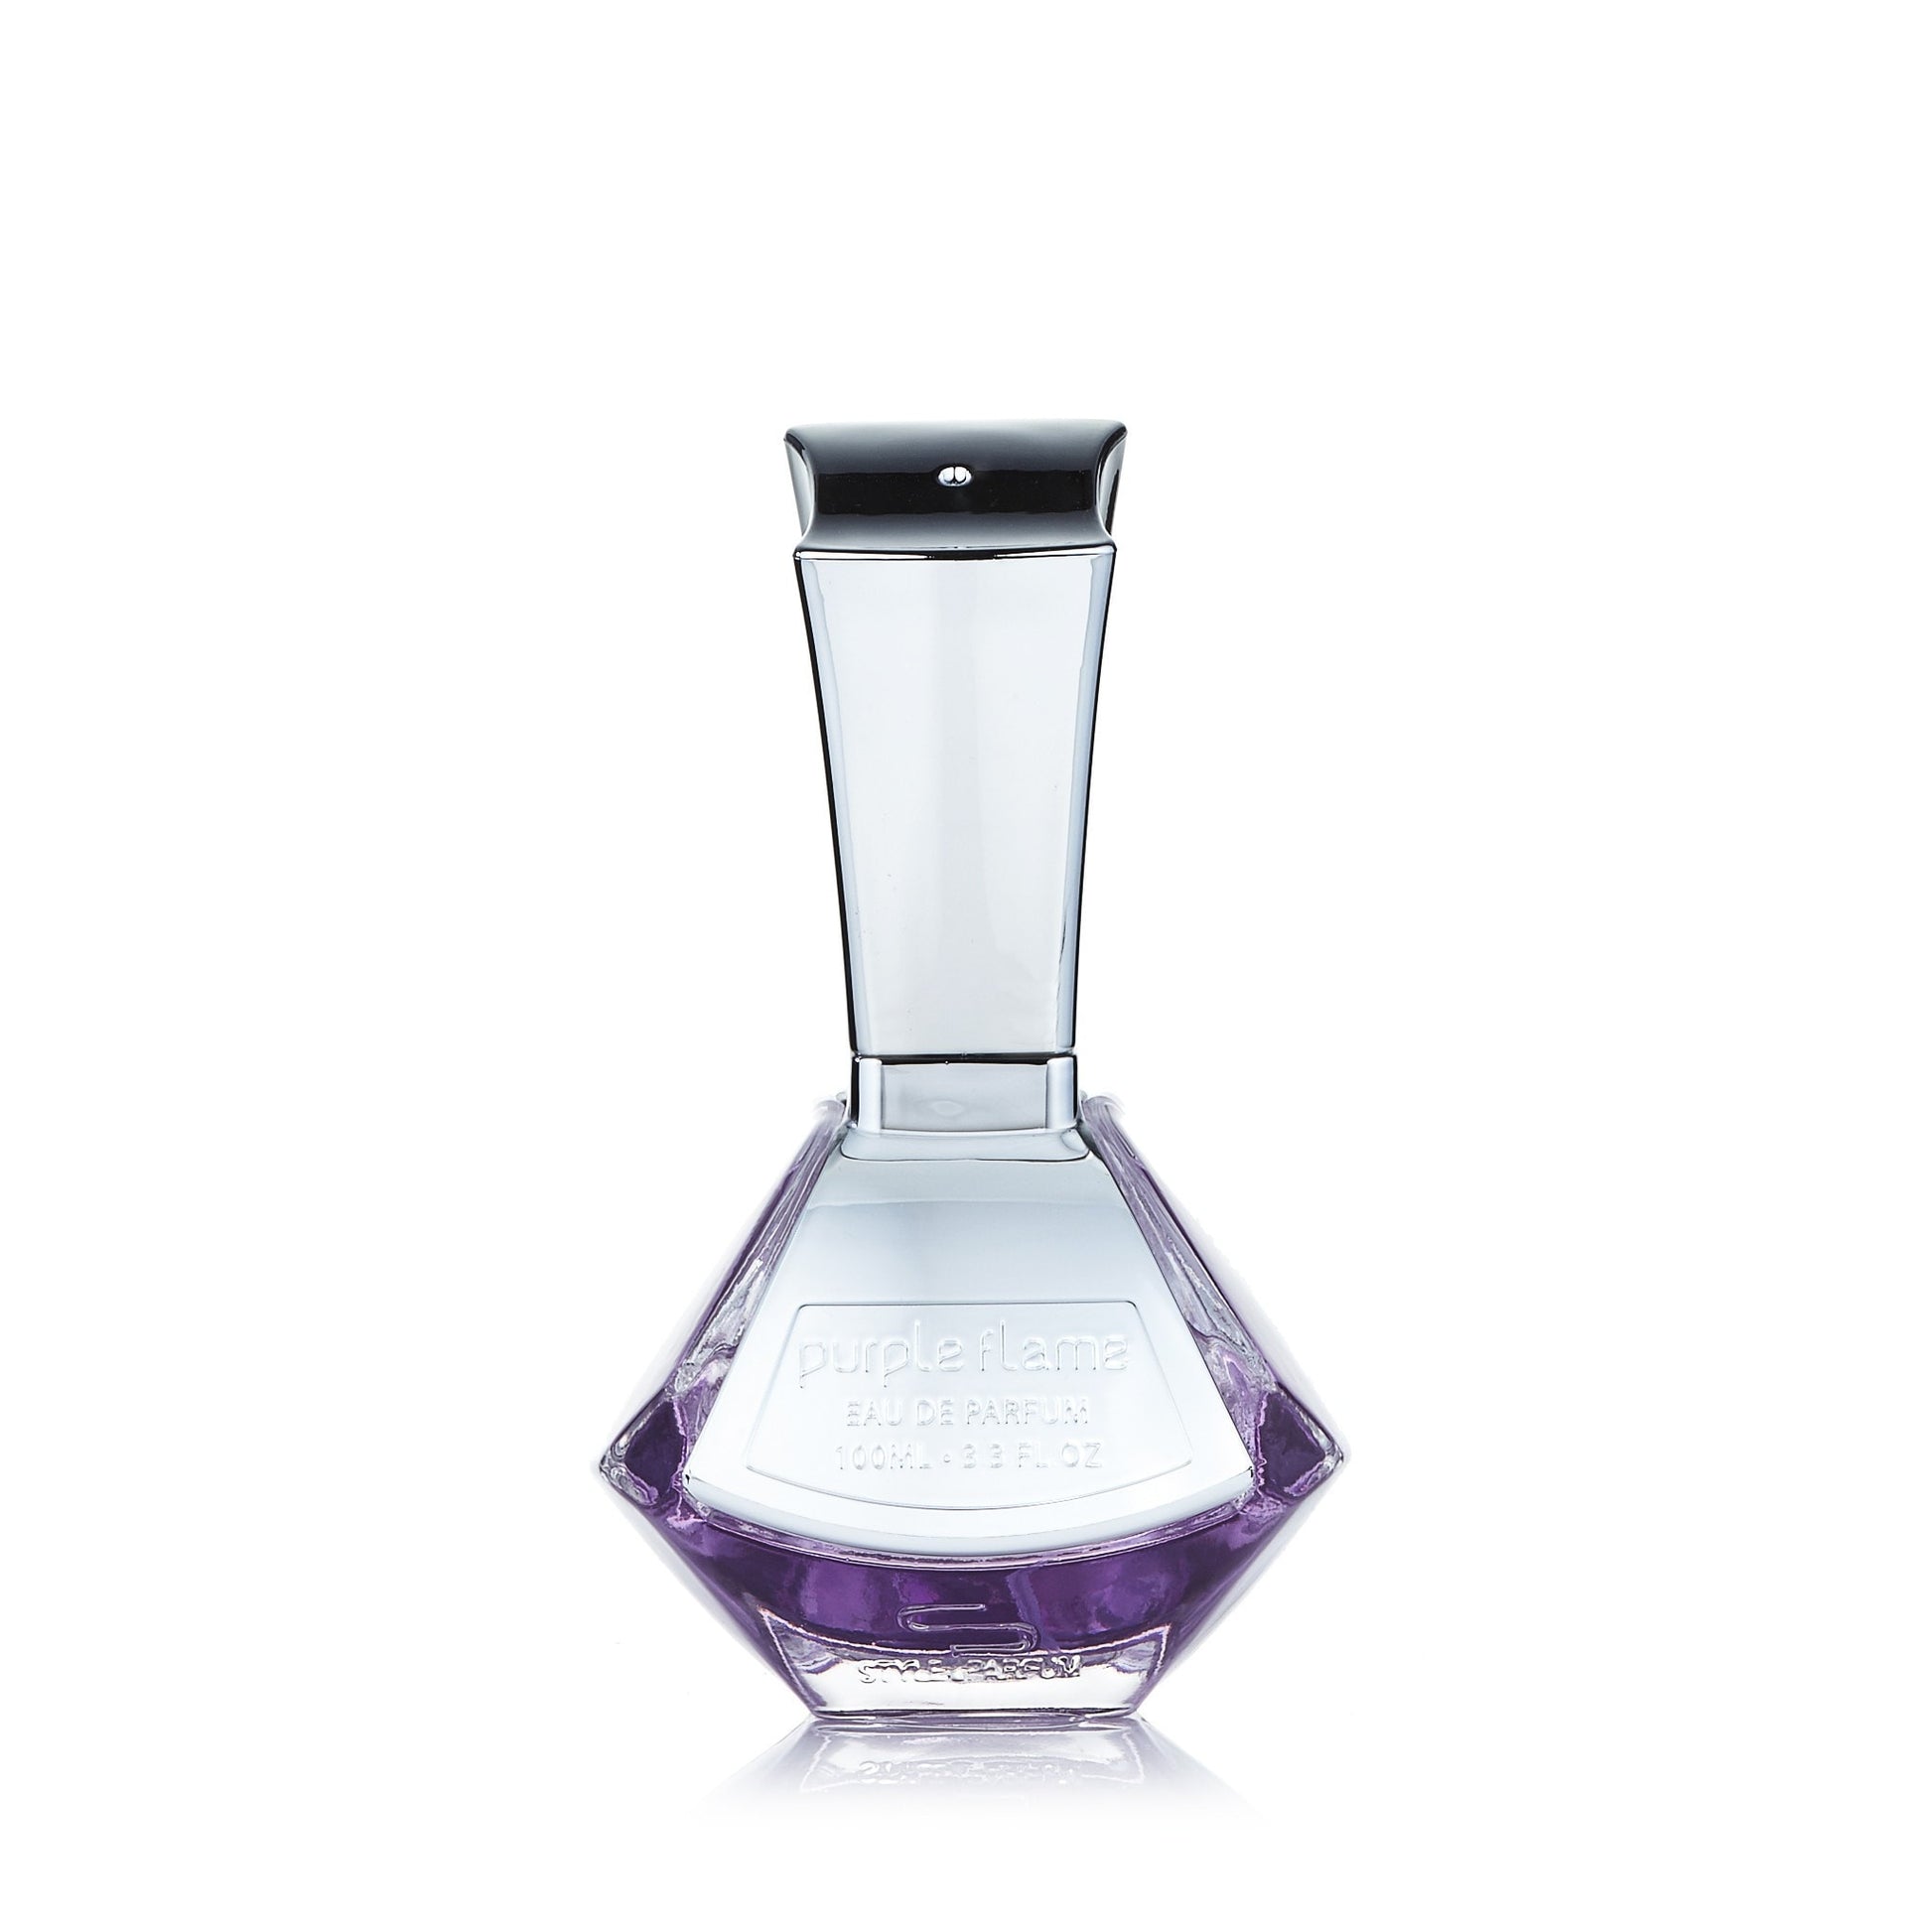 Purple Flame Eau de Parfum Spray for Women 3.4 oz. Click to open in modal